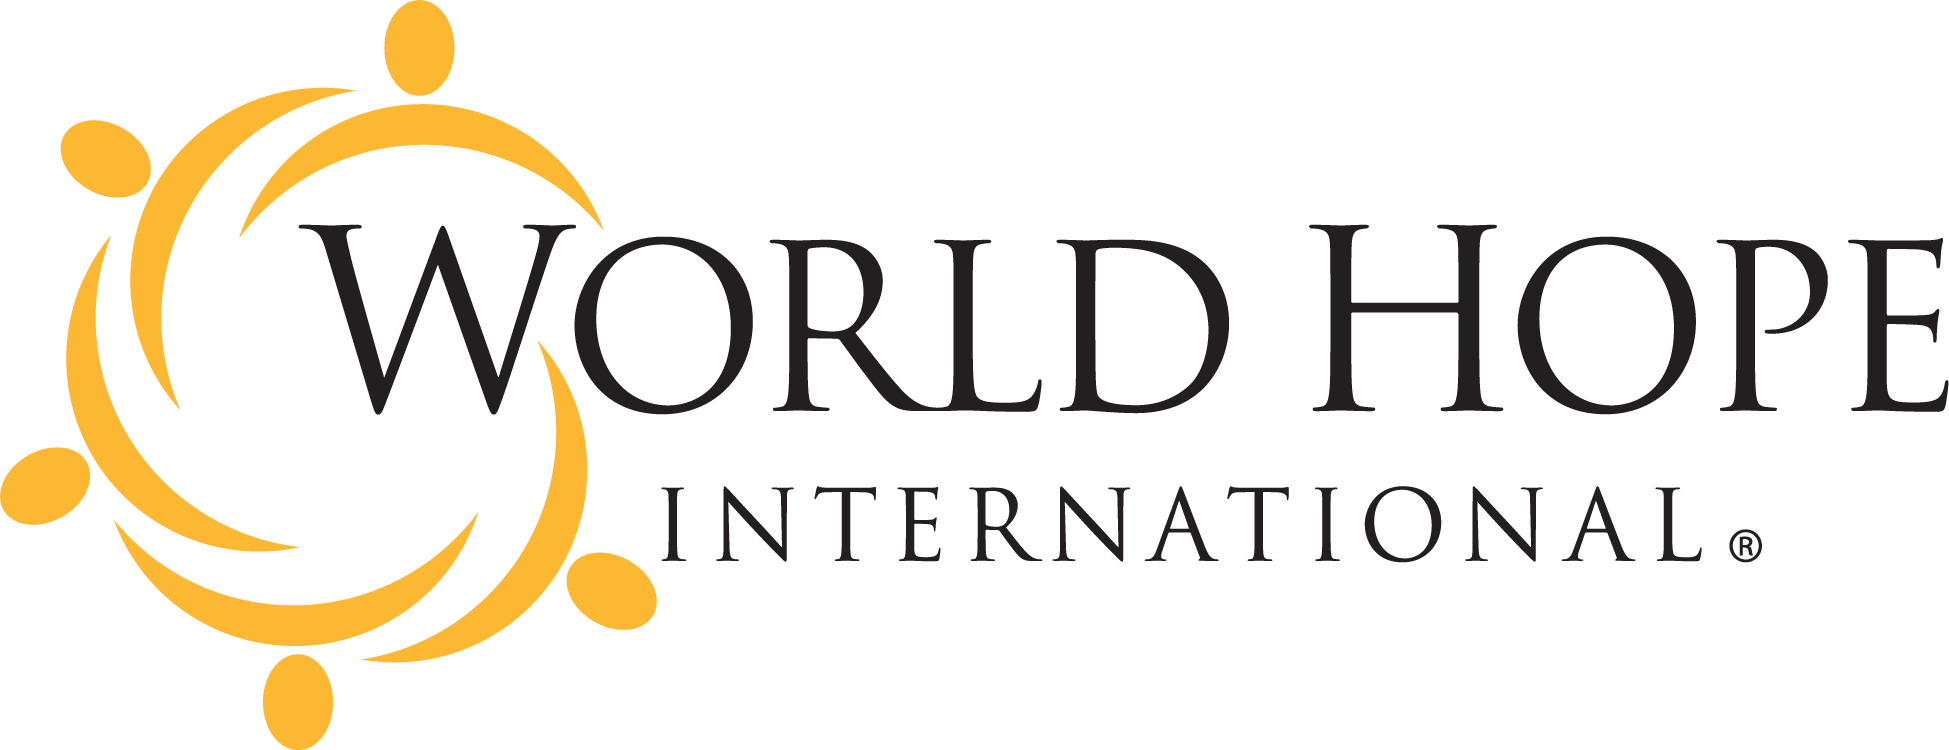 World hope international logo